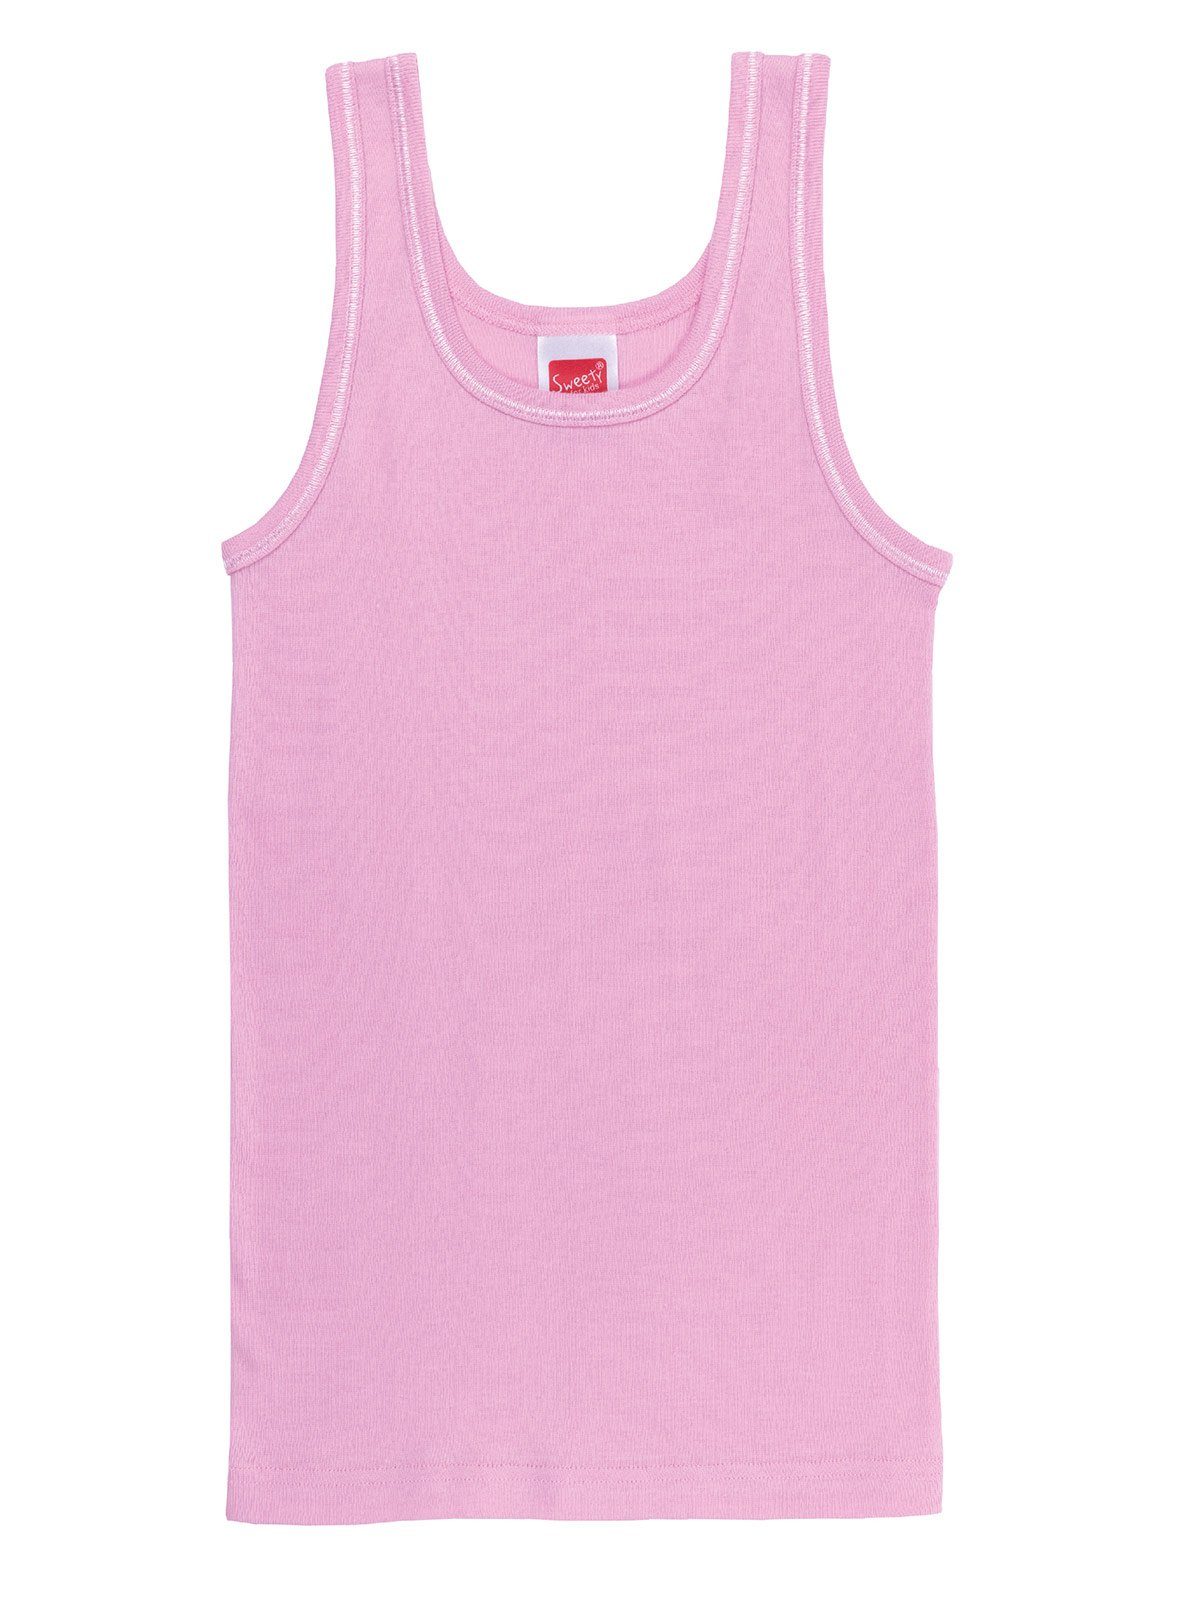 Pack hohe Sweety Markenqualität weiss-rose Unterhemd 3-St) for Mädchen Kids (Packung, 3er Feinripp Unterhemd